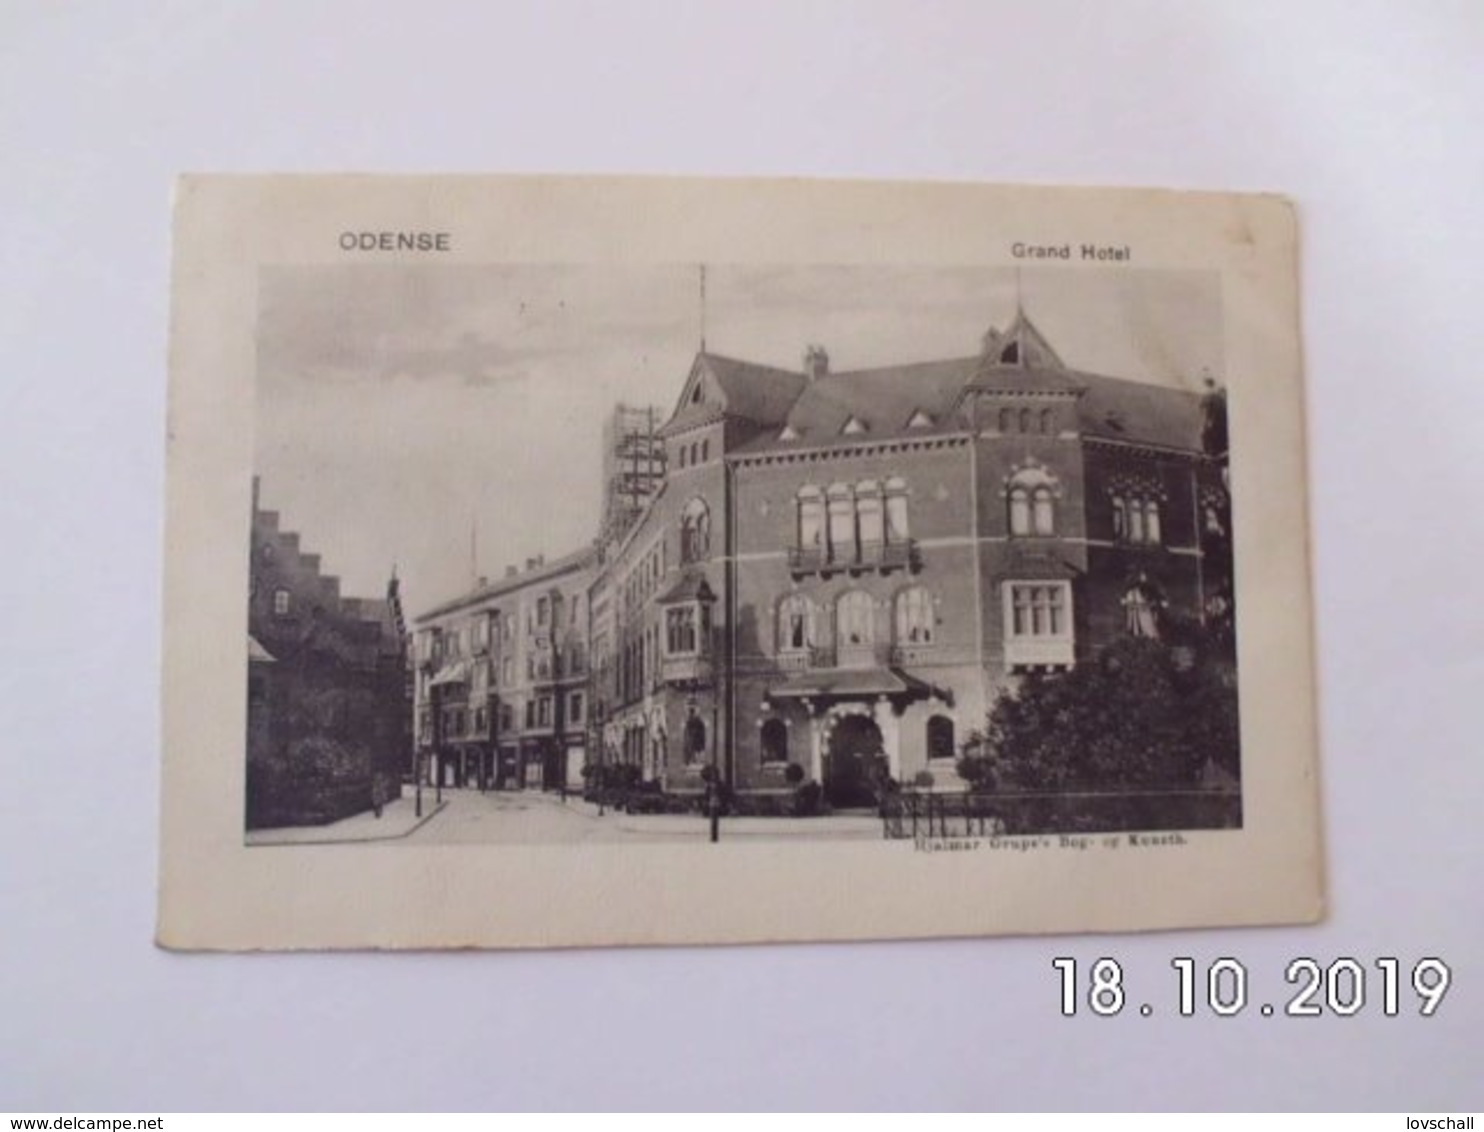 Odense. - Grand Hotel. (20 - 1 - 1907) - Danemark